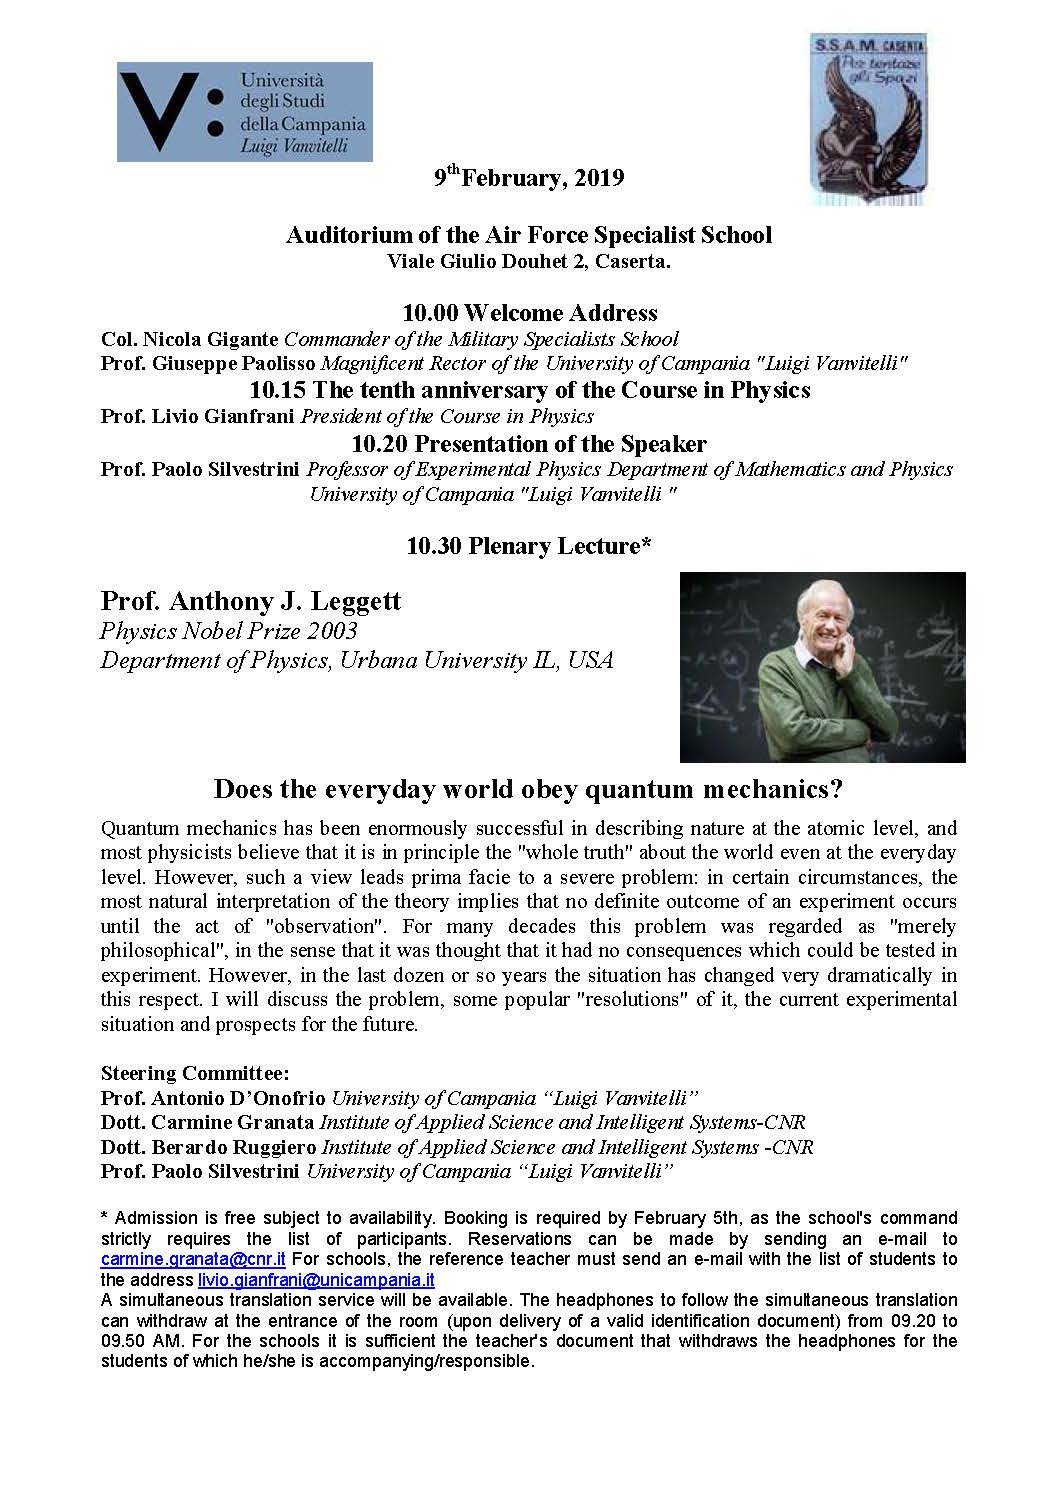 Prof. Anthony J. Leggett “Physics Nobel Prize 2003” Urbana University USA – Plenary Lecture:         Does the everyday world obey quantum mechanics?